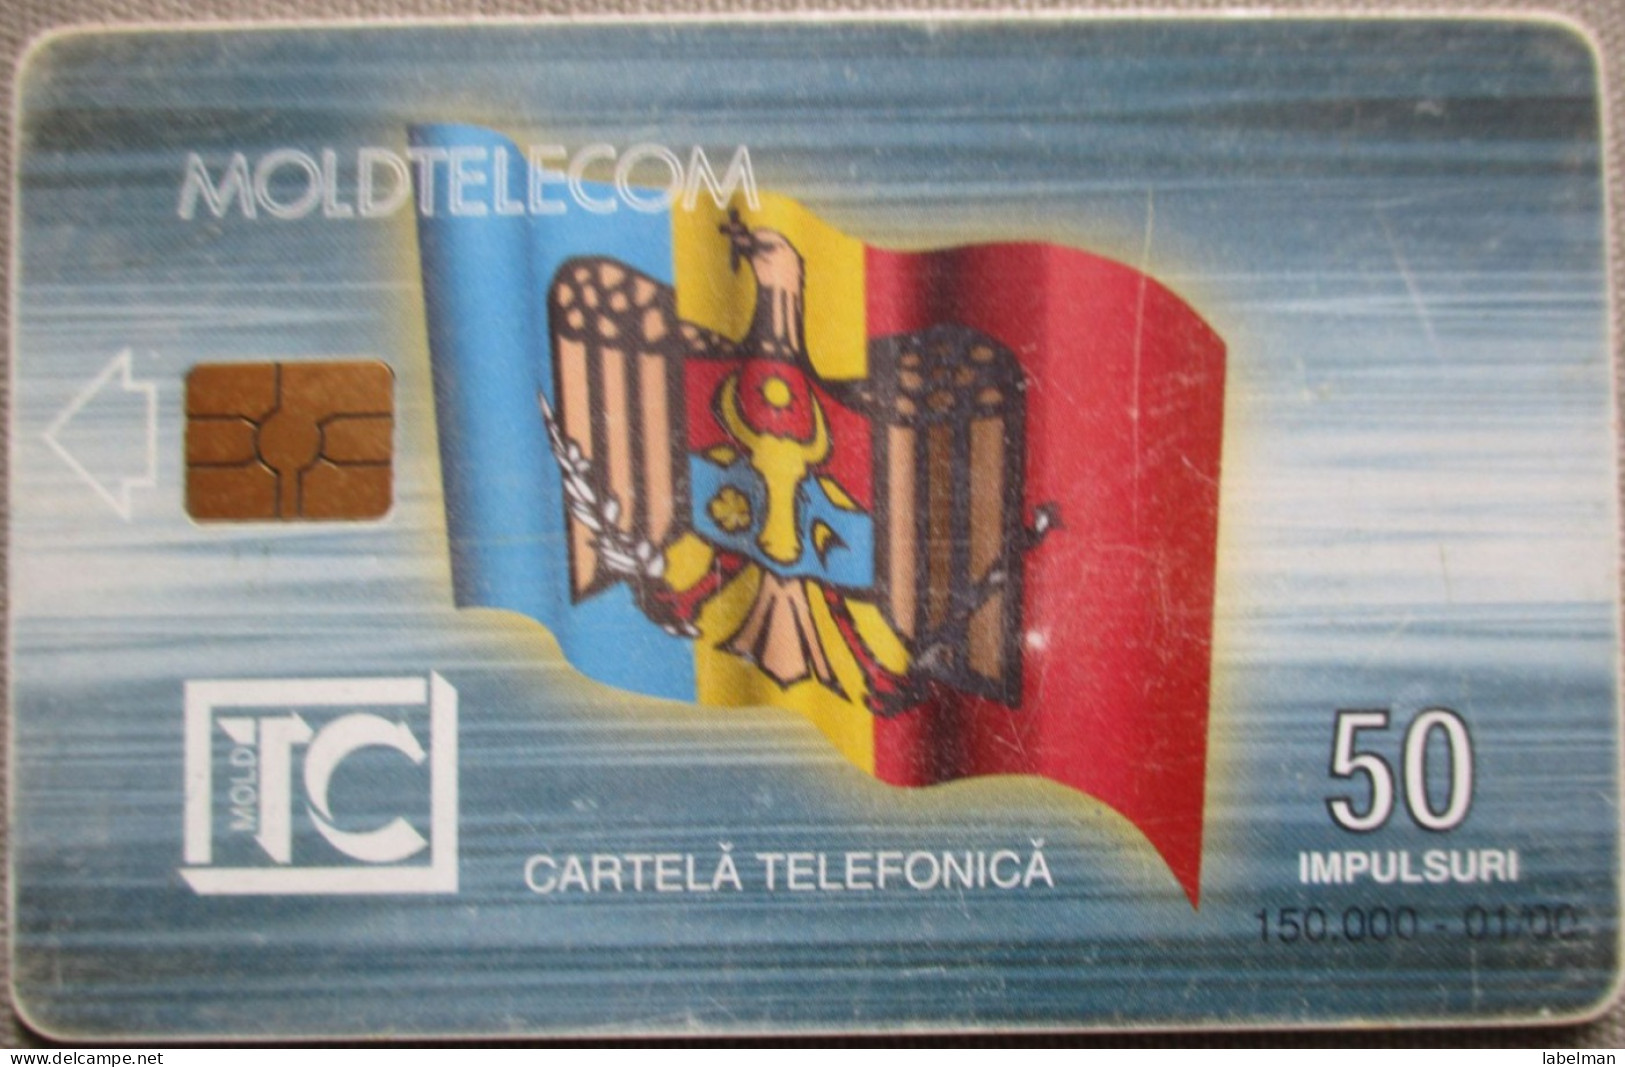 MOLDOVA MOLDTELECOM TELEPHONE PHONE TELEFONWERTKARTE PHONECARD CARTELA CARD CARTE KARTE COLLECTOR BEZEQ 50 UNITS - Moldawien (Moldau)